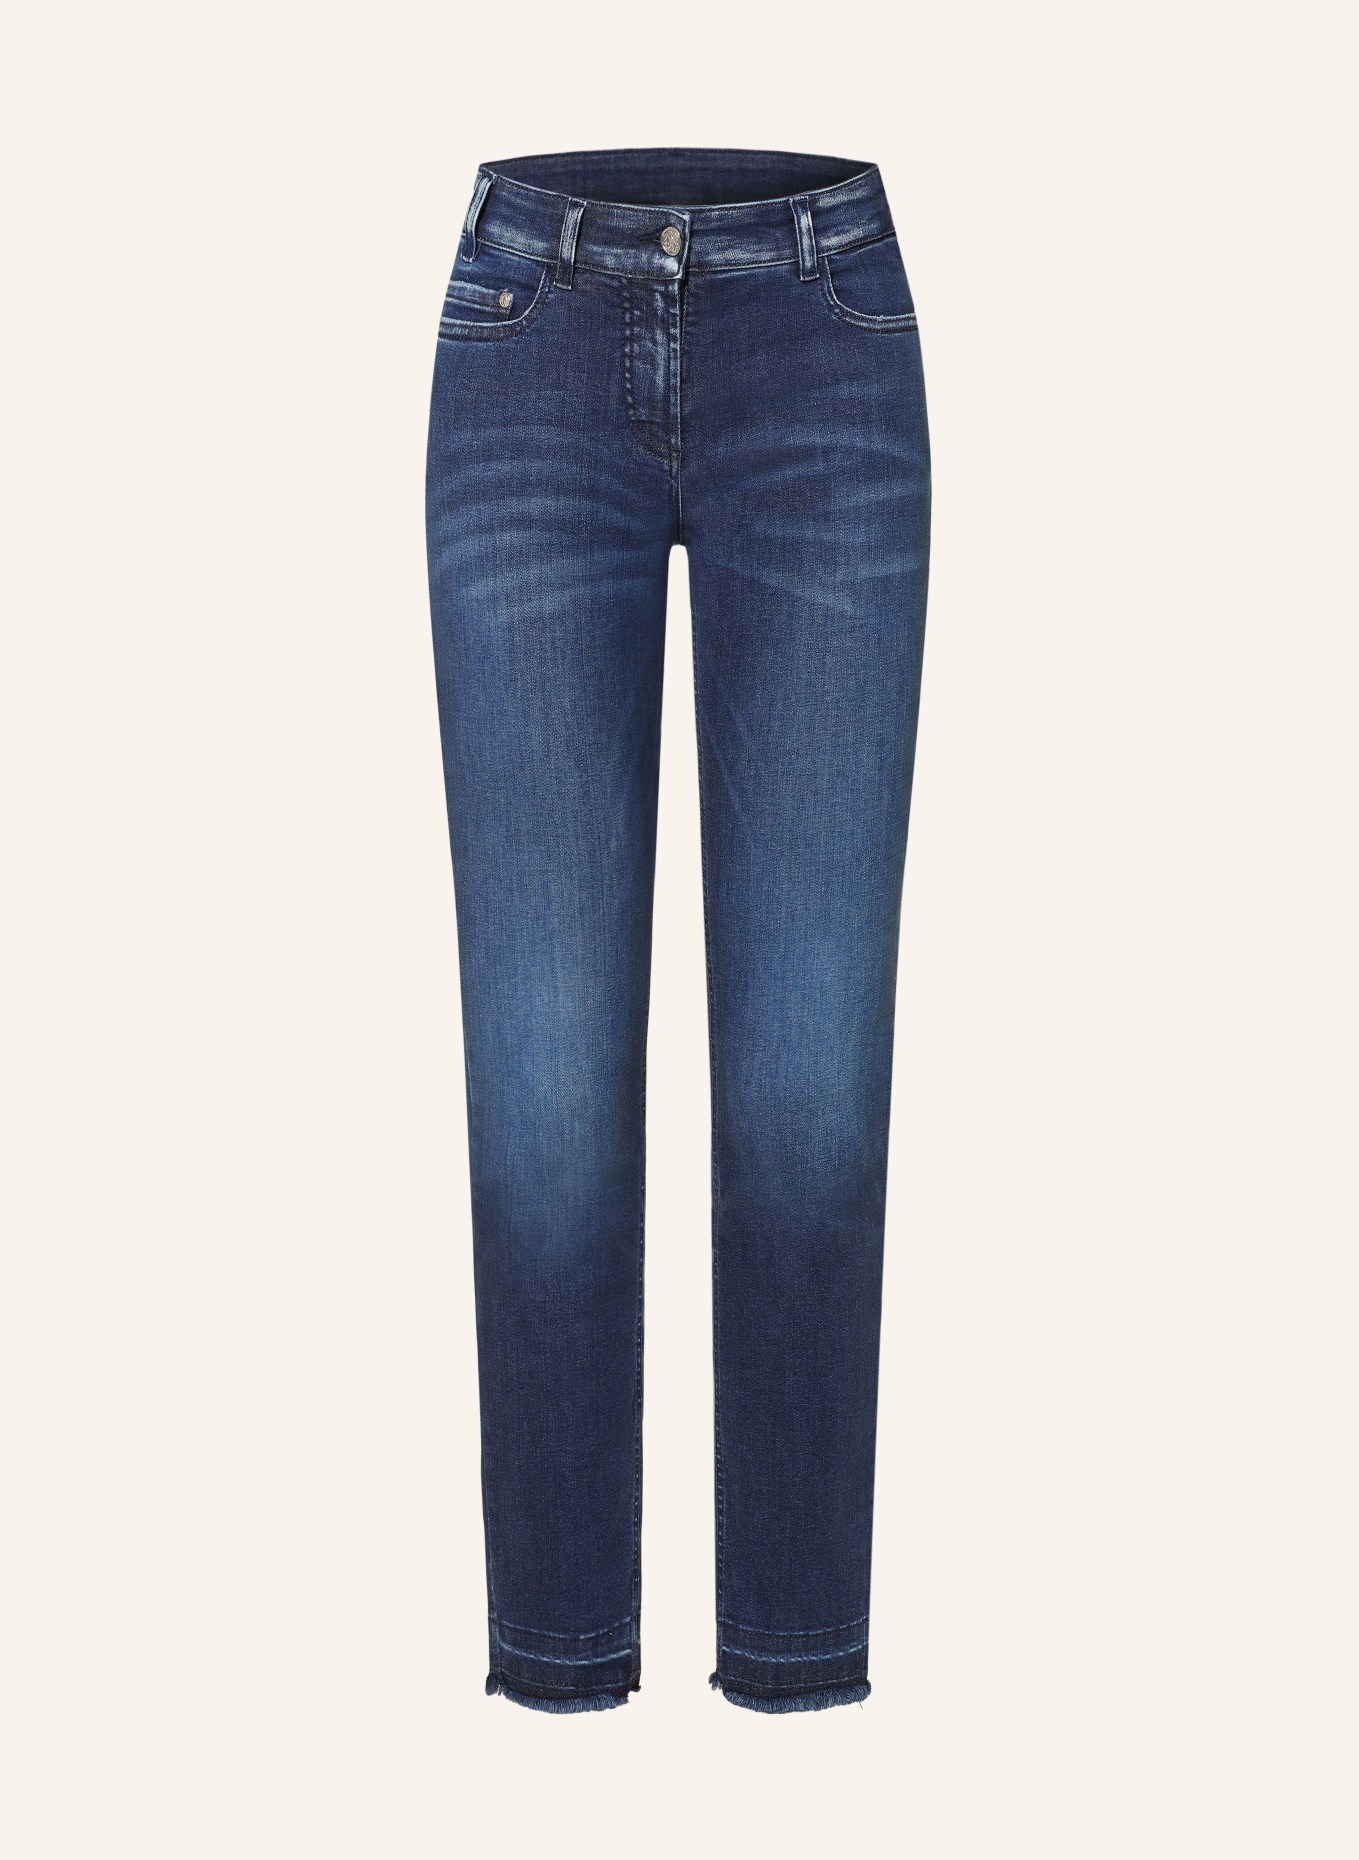 ULLI EHRLICH SPORTALM Skinny Jeans, Farbe: 23 Armada Blue (Bild 1)